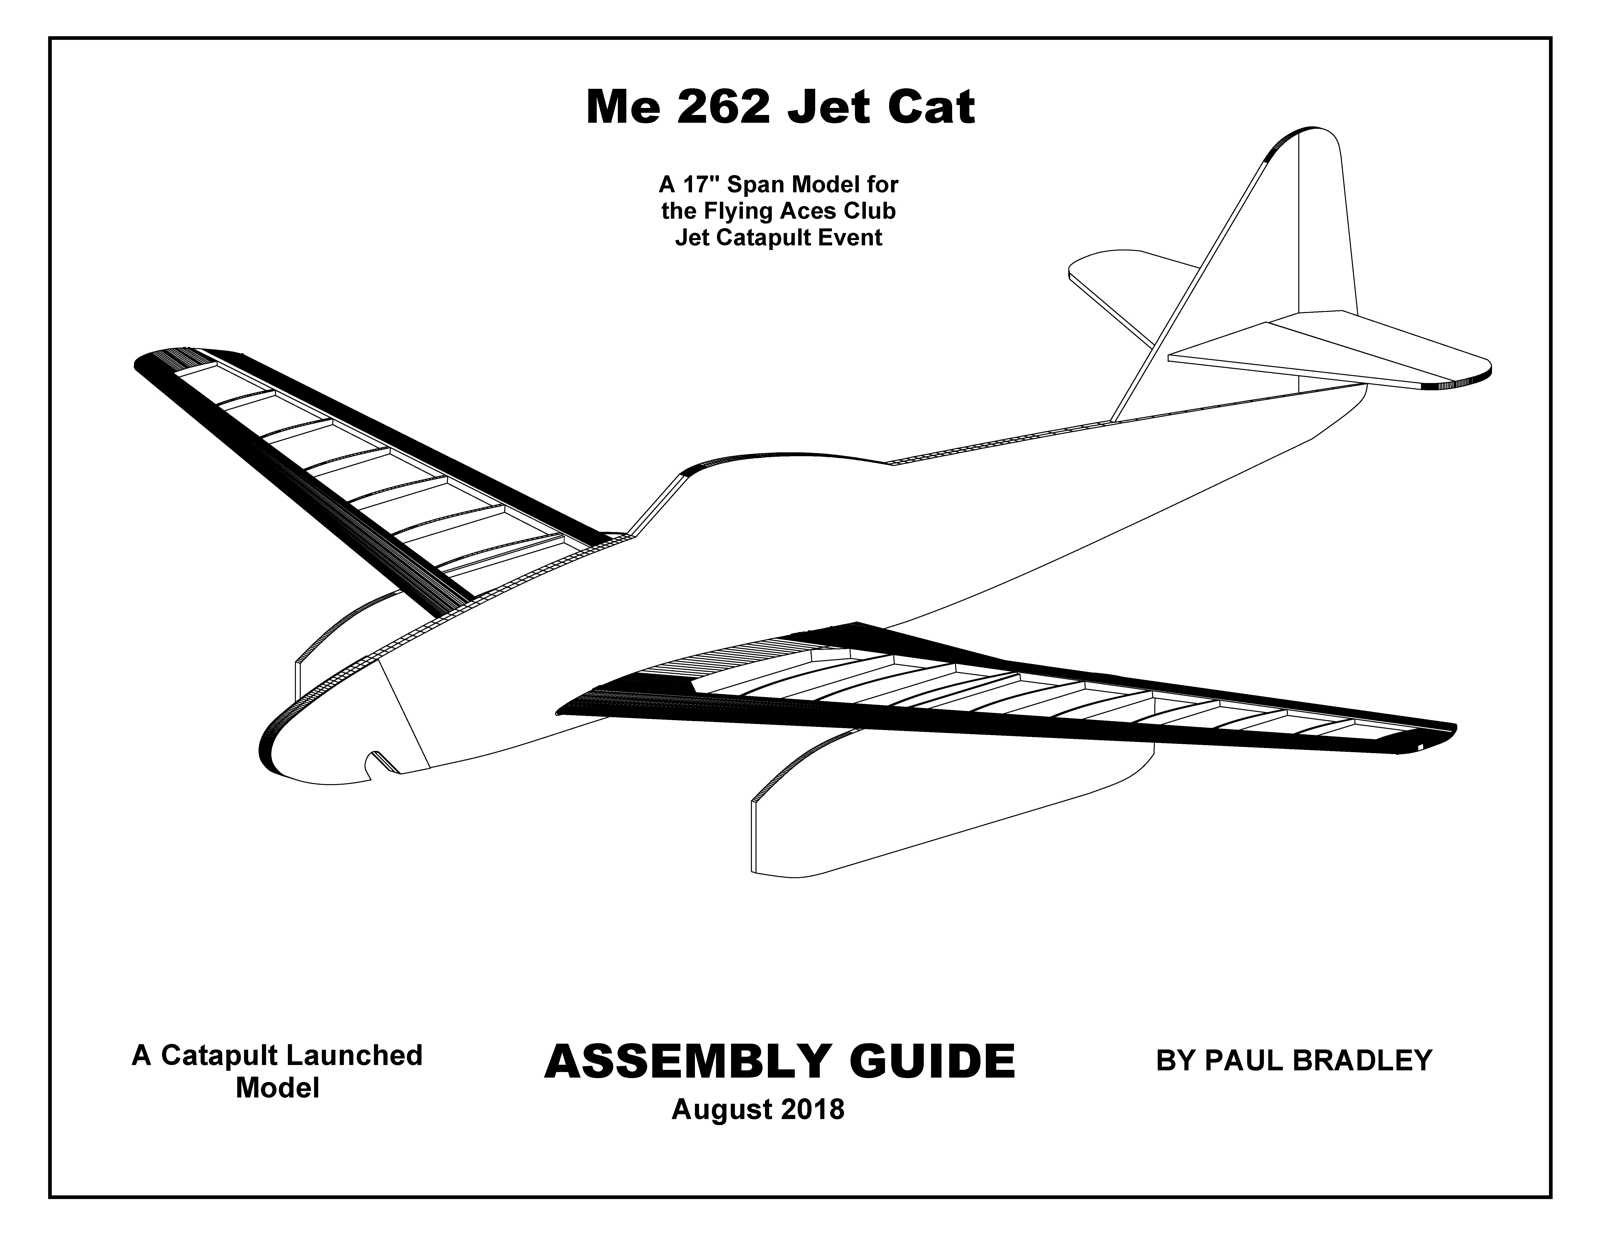 https://0201.nccdn.net/1_2/000/000/13a/704/Me-262-Jet-Cat-Assembly-Guide-page-1600x1236.jpg